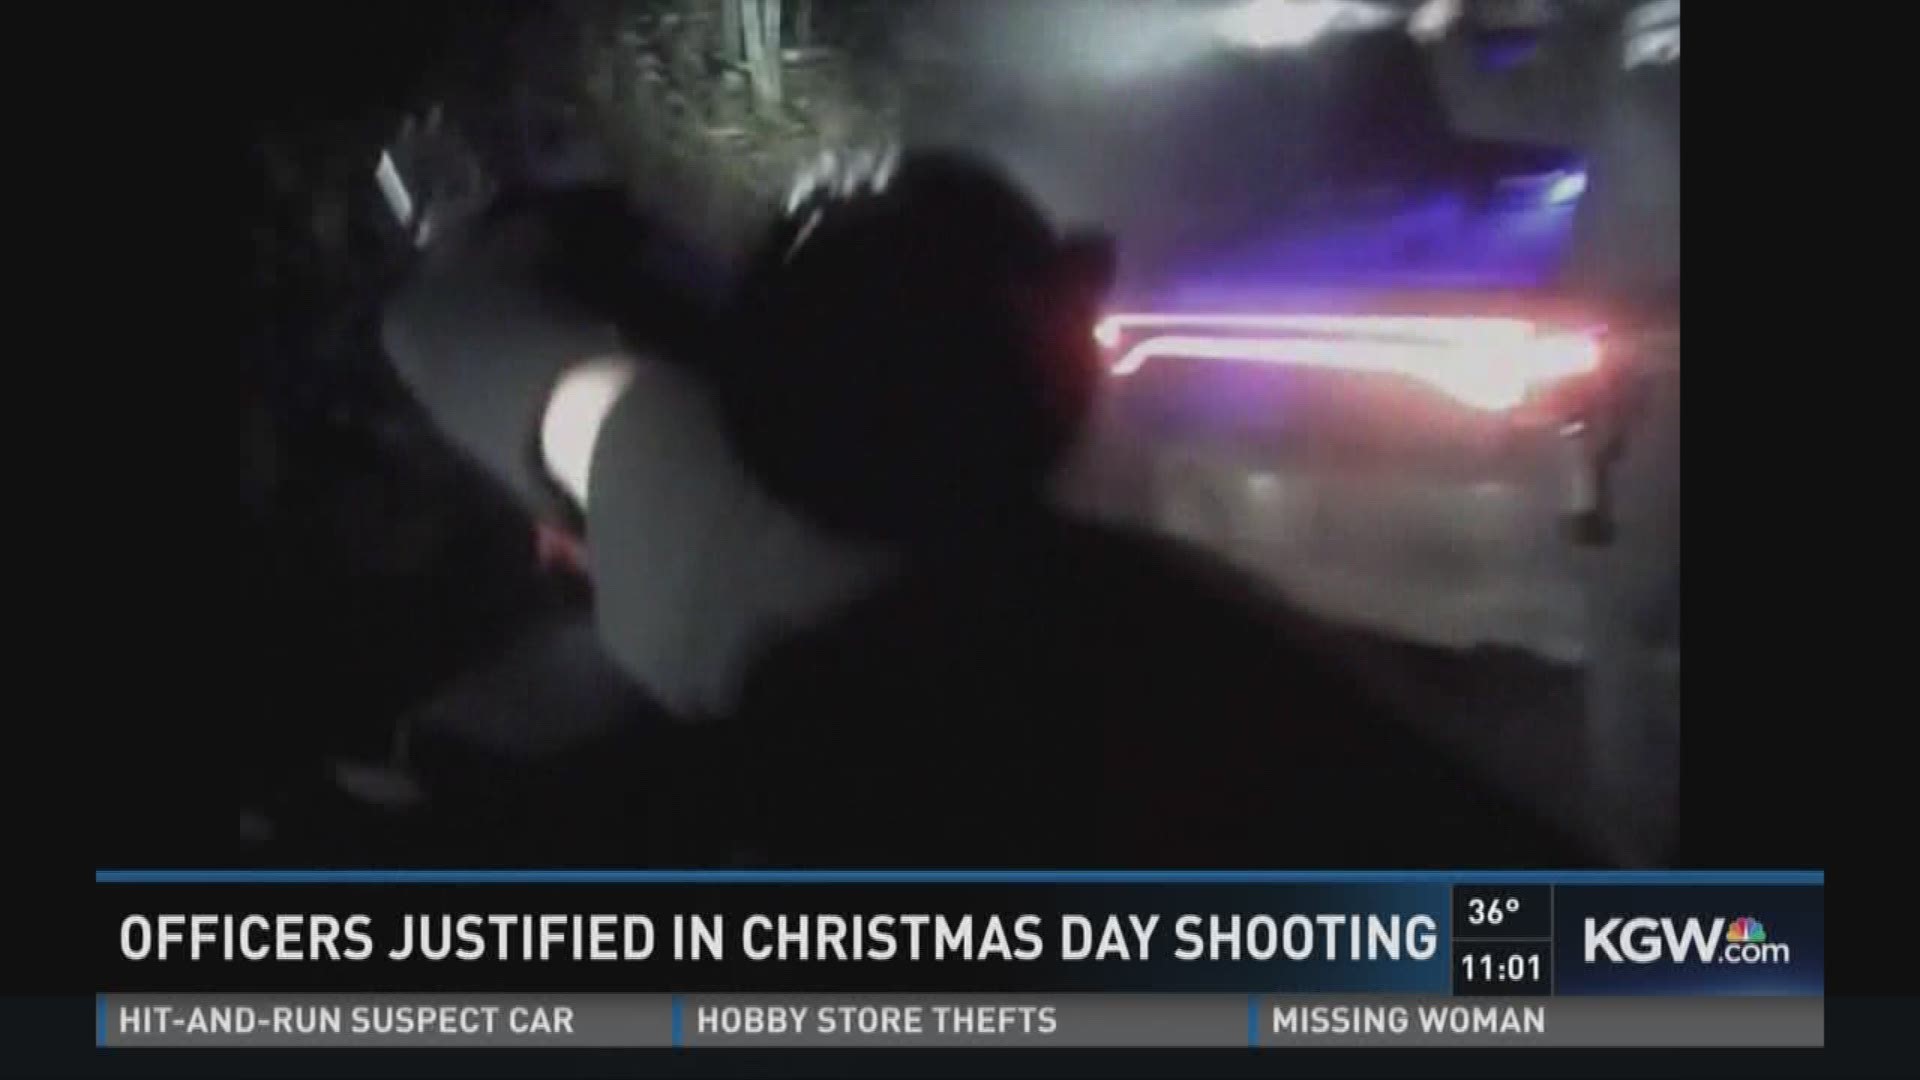 Officers justified in Christmas night shooting